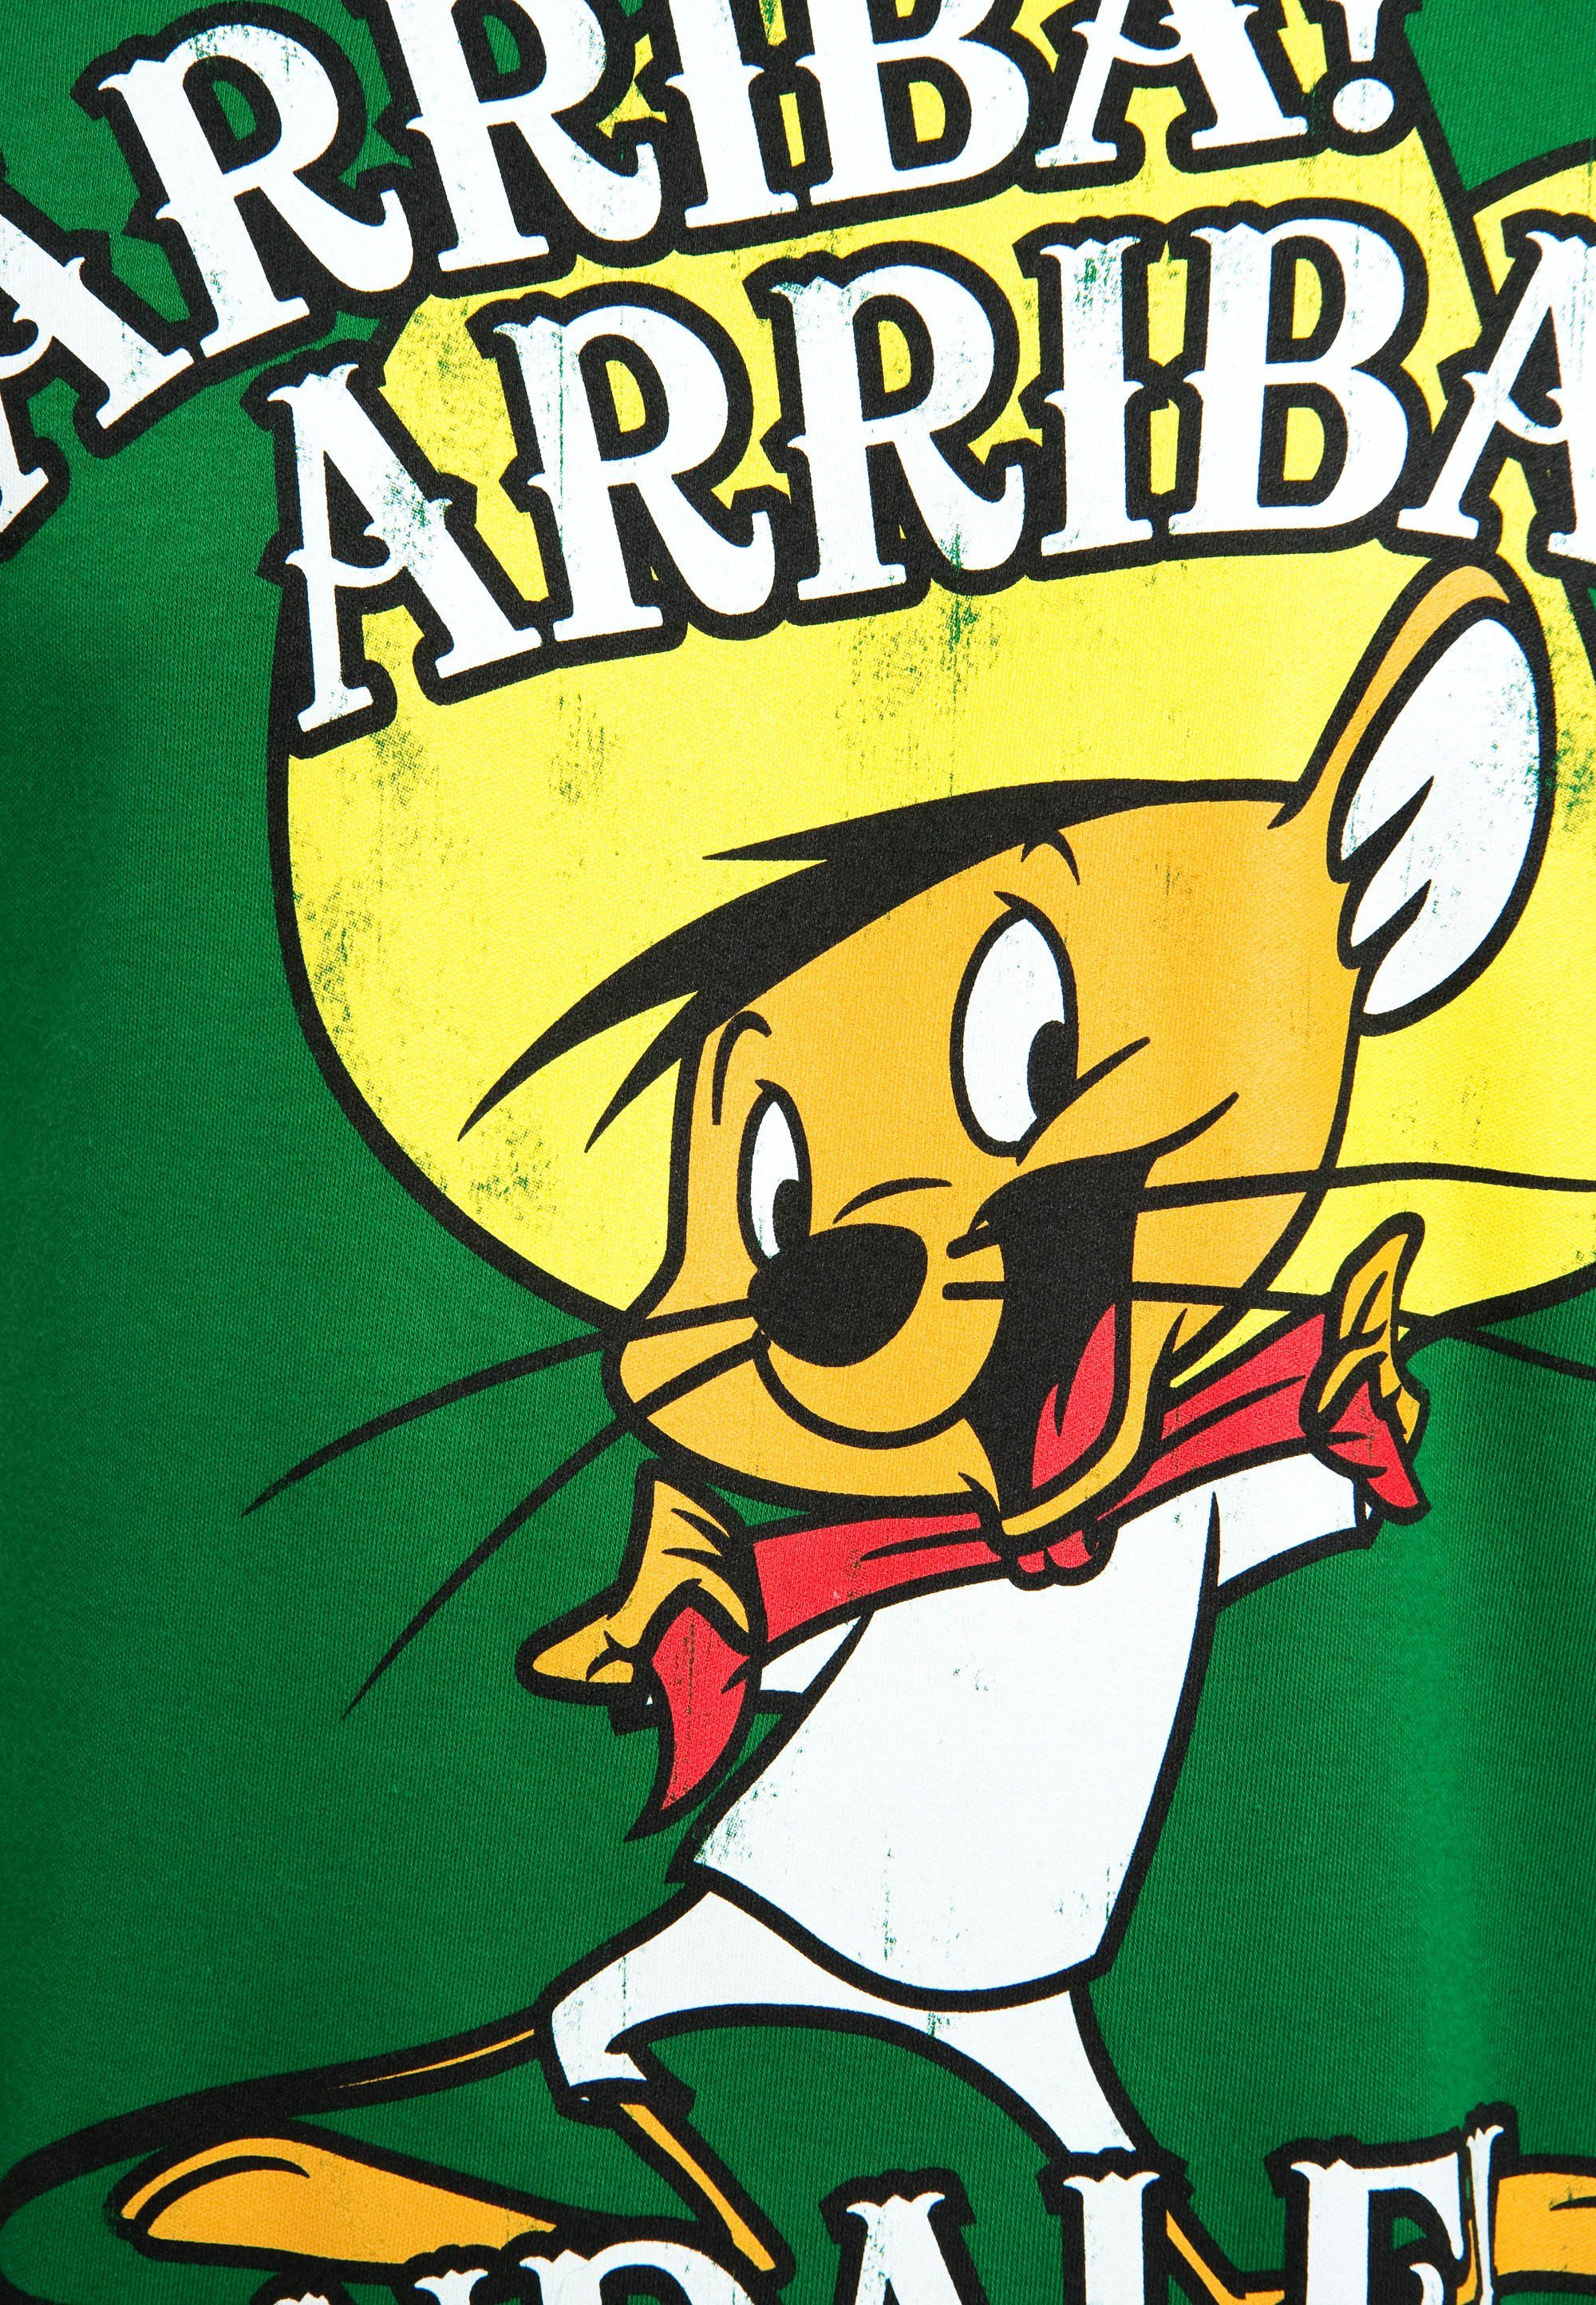 LOGOSHIRT T-Shirt Aufdruck Andale! mit Tunes Gonzales Speedy - Looney Arriba